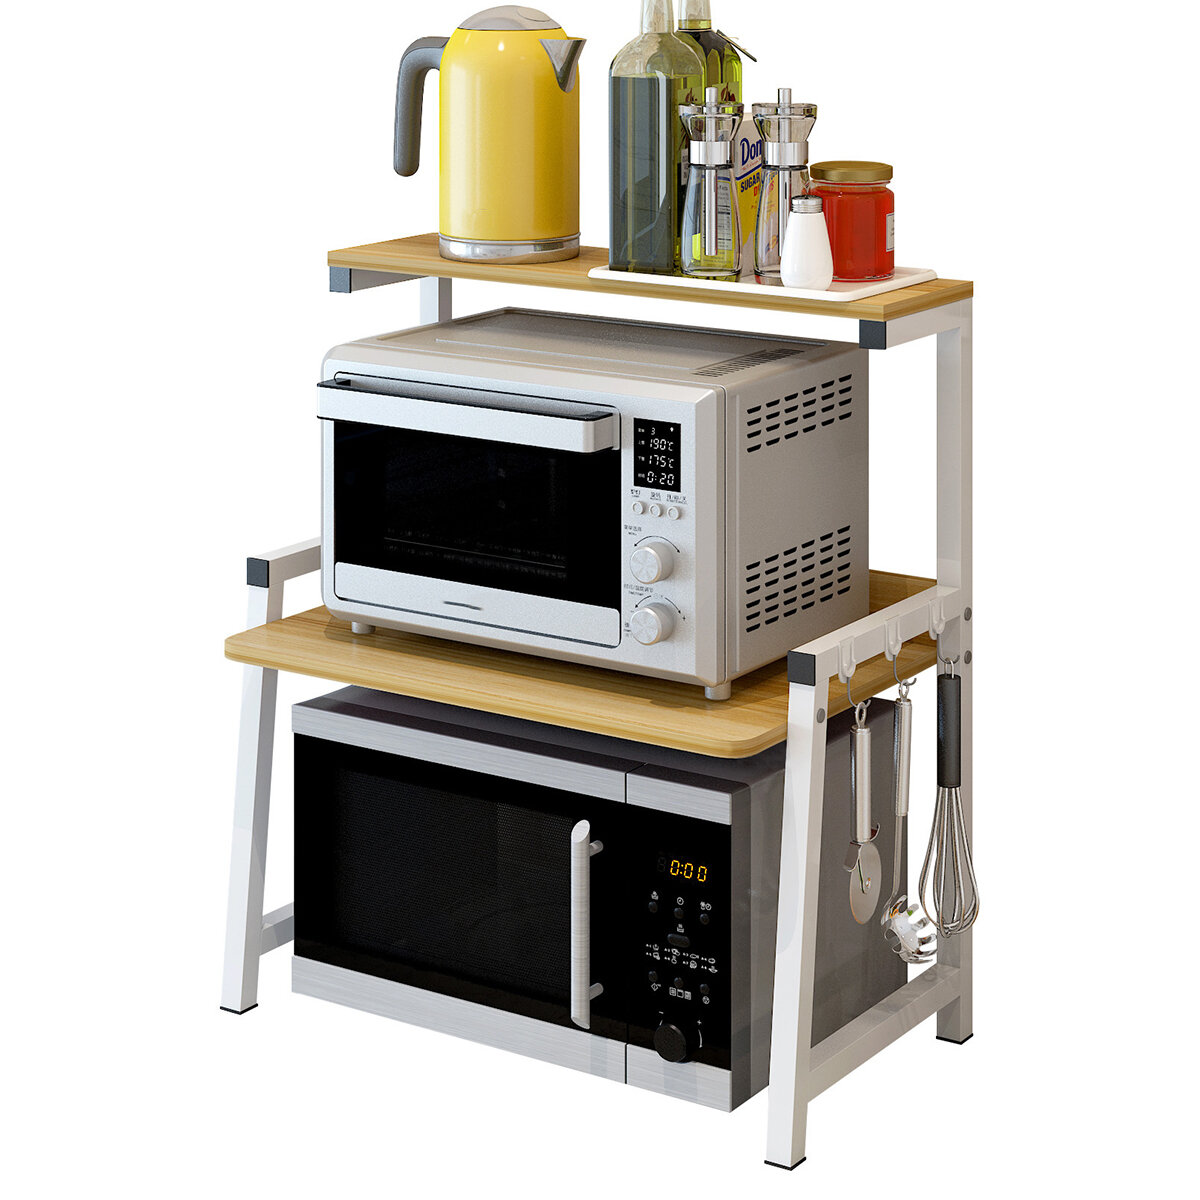 

2 Tiers Microwave Oven Rack Storage Shelf Stand Kitchen Storage Bracket Space Saving Kitchen Organizer with Hooks